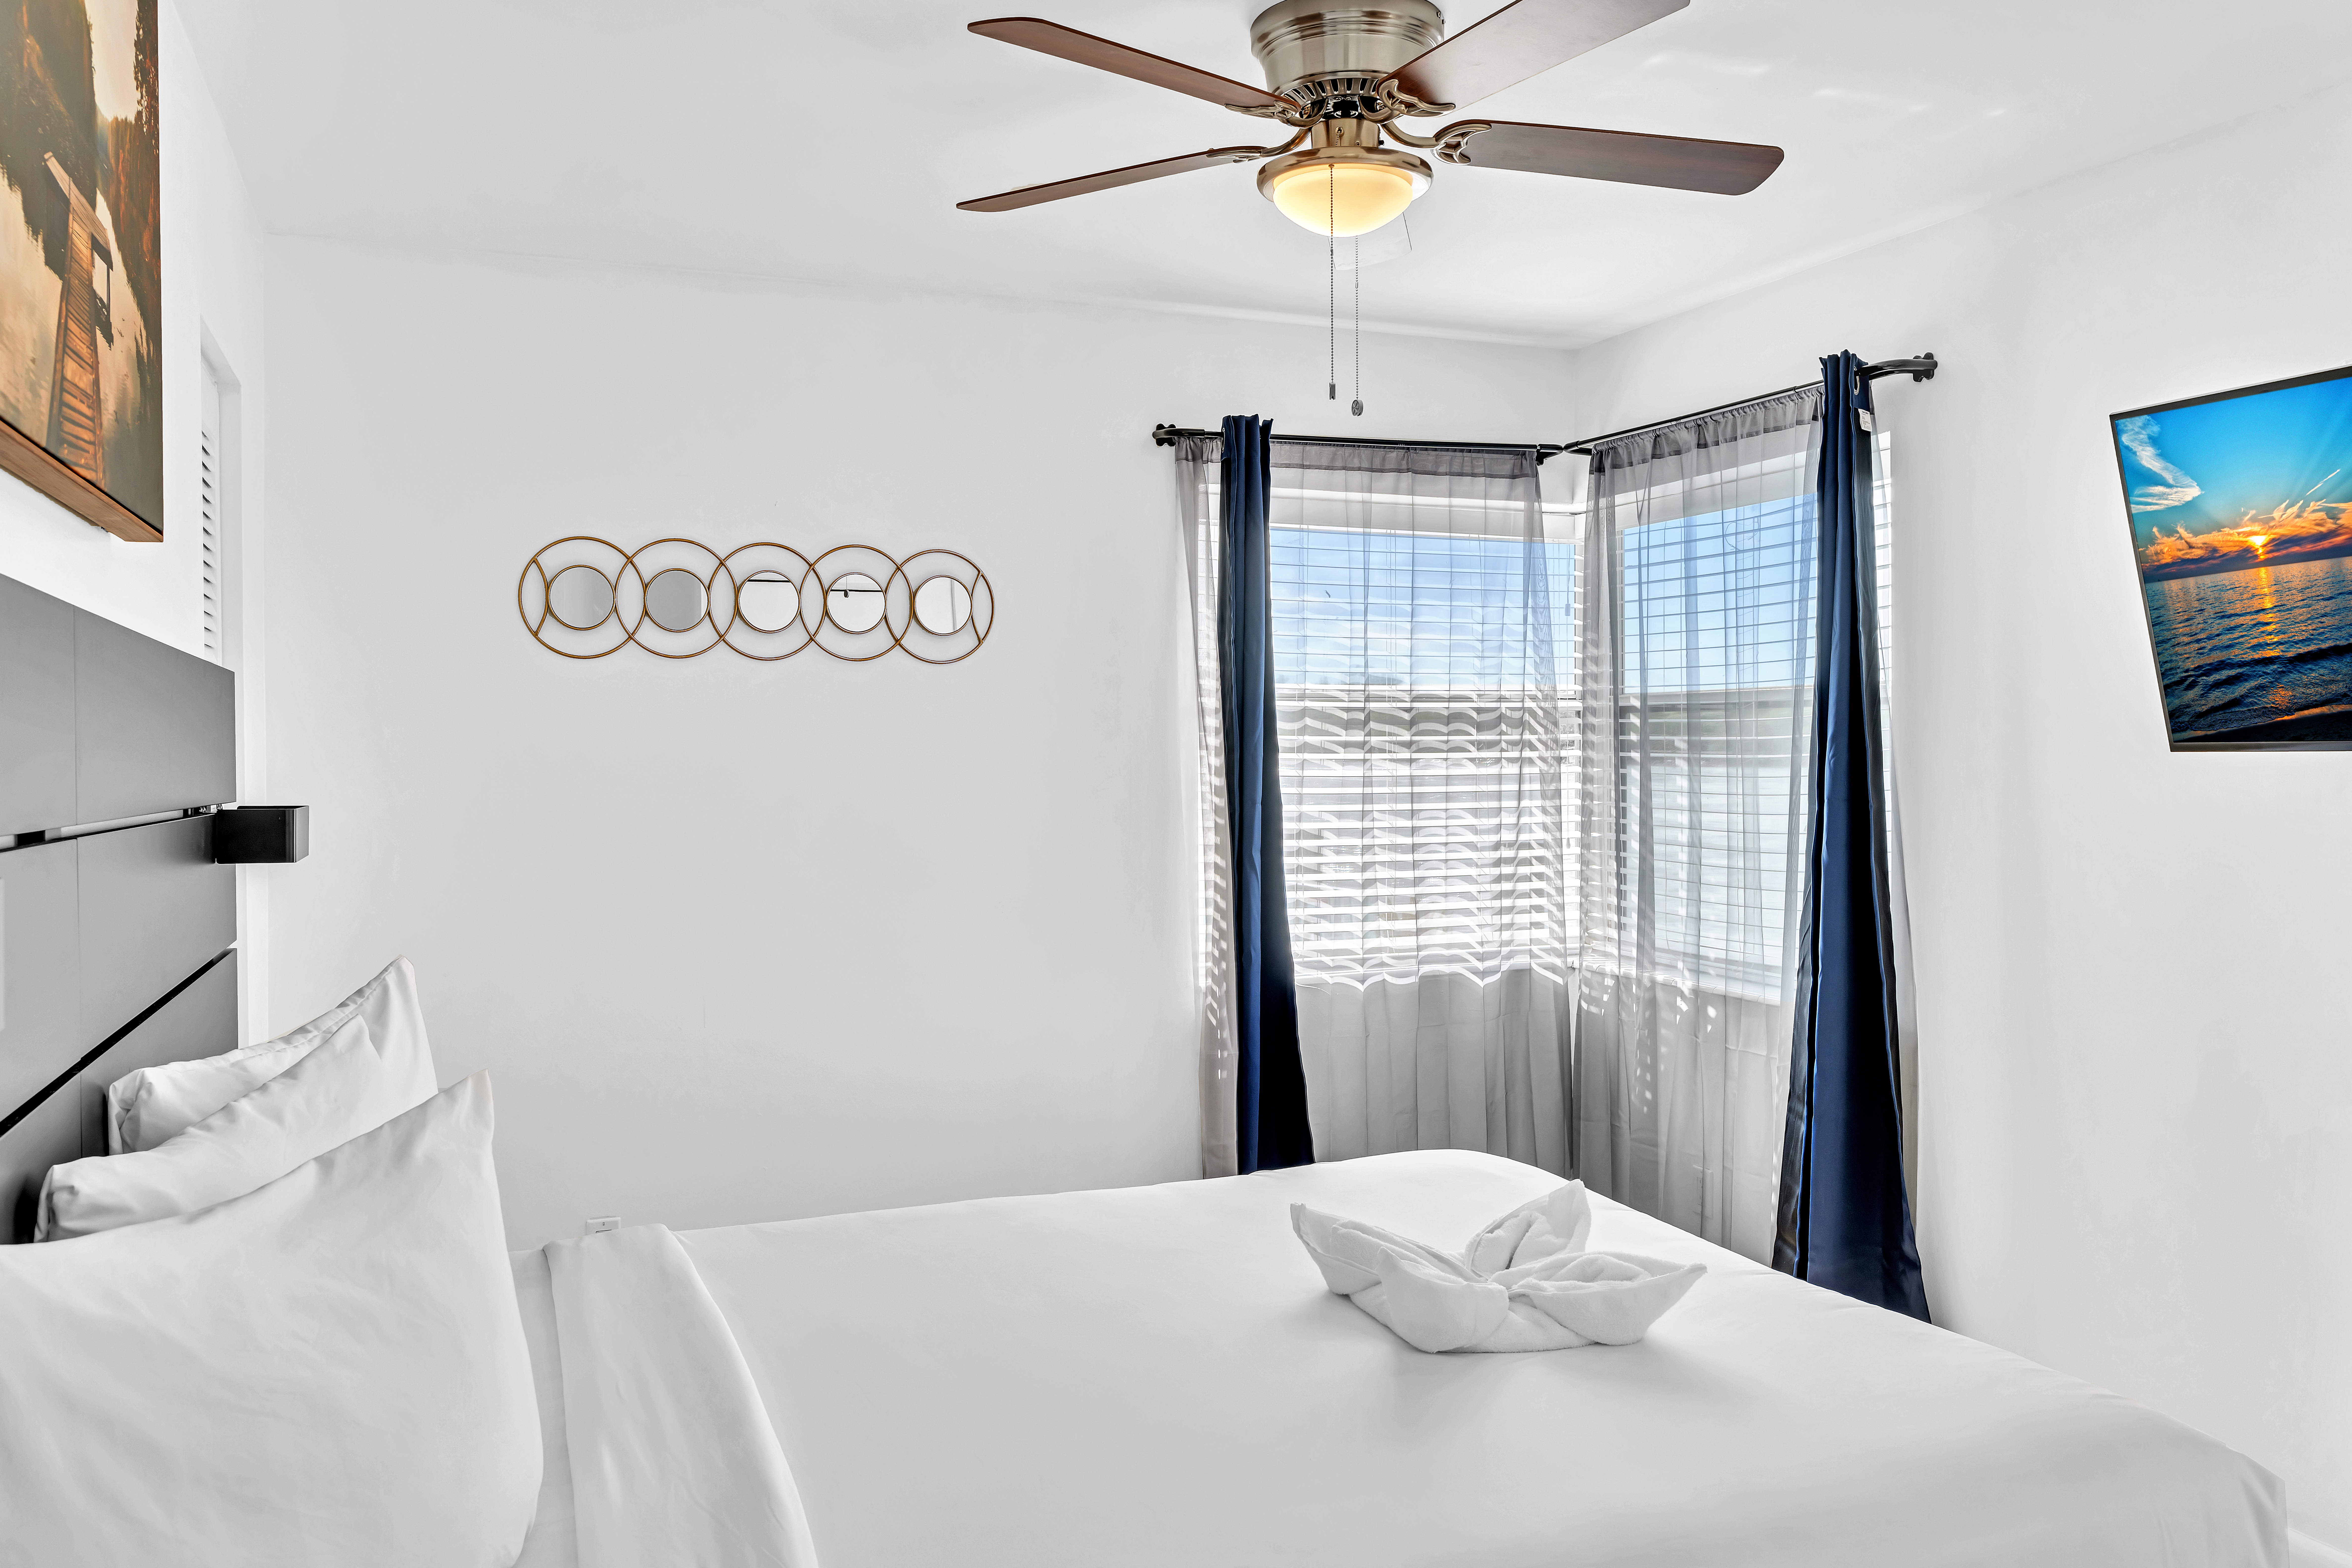 Florida 2023: New Hotel Opening - 2 bedroom hotel. Queen beds with the ocean view 